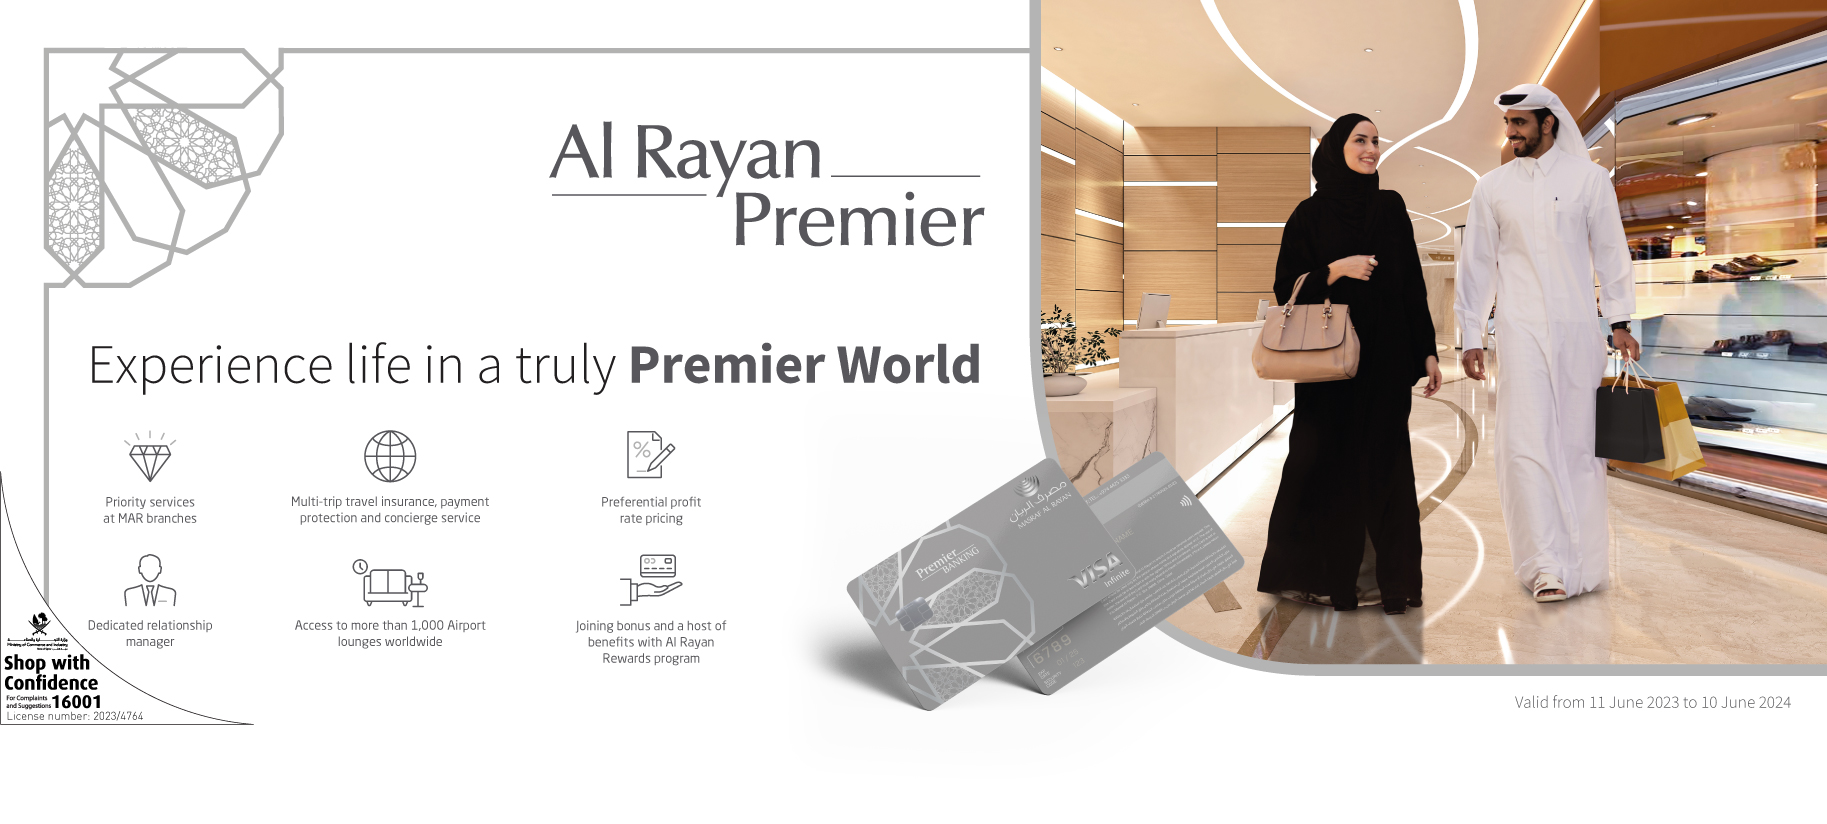 Al Rayan Premier